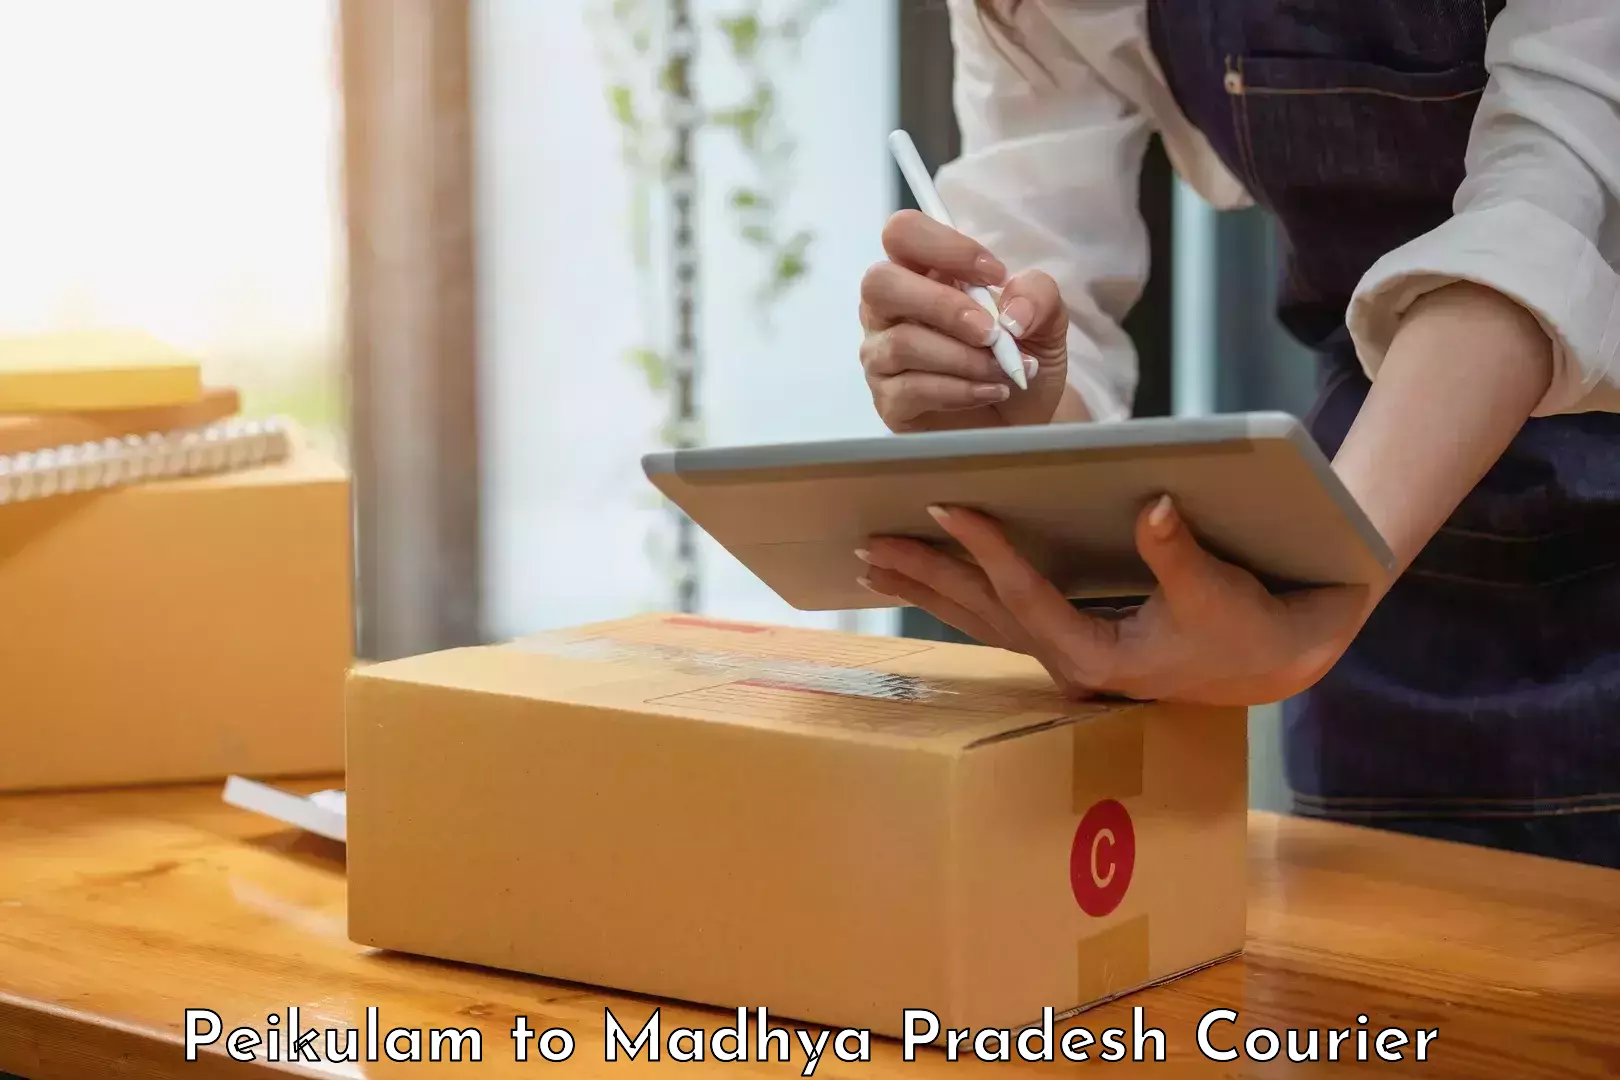 Courier service booking Peikulam to Maheshwar